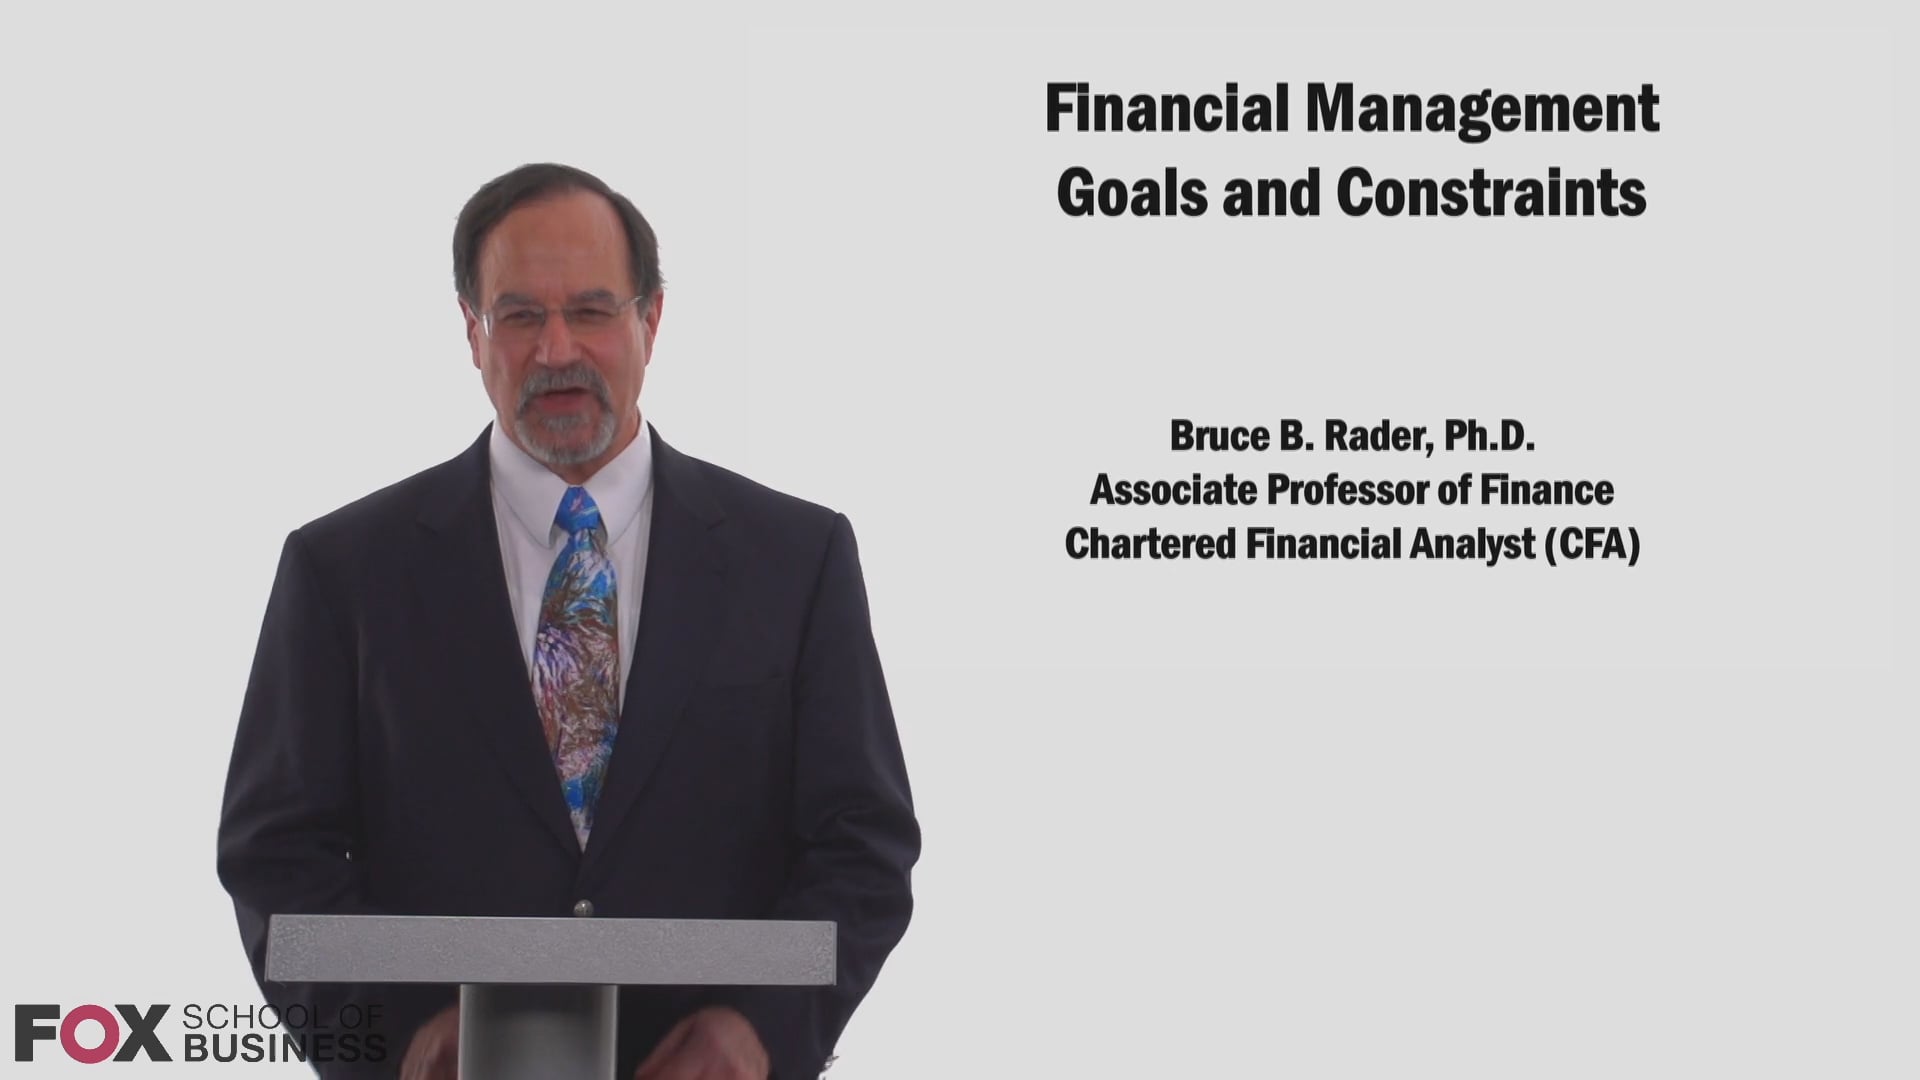 Financial Management Goals and Constraints